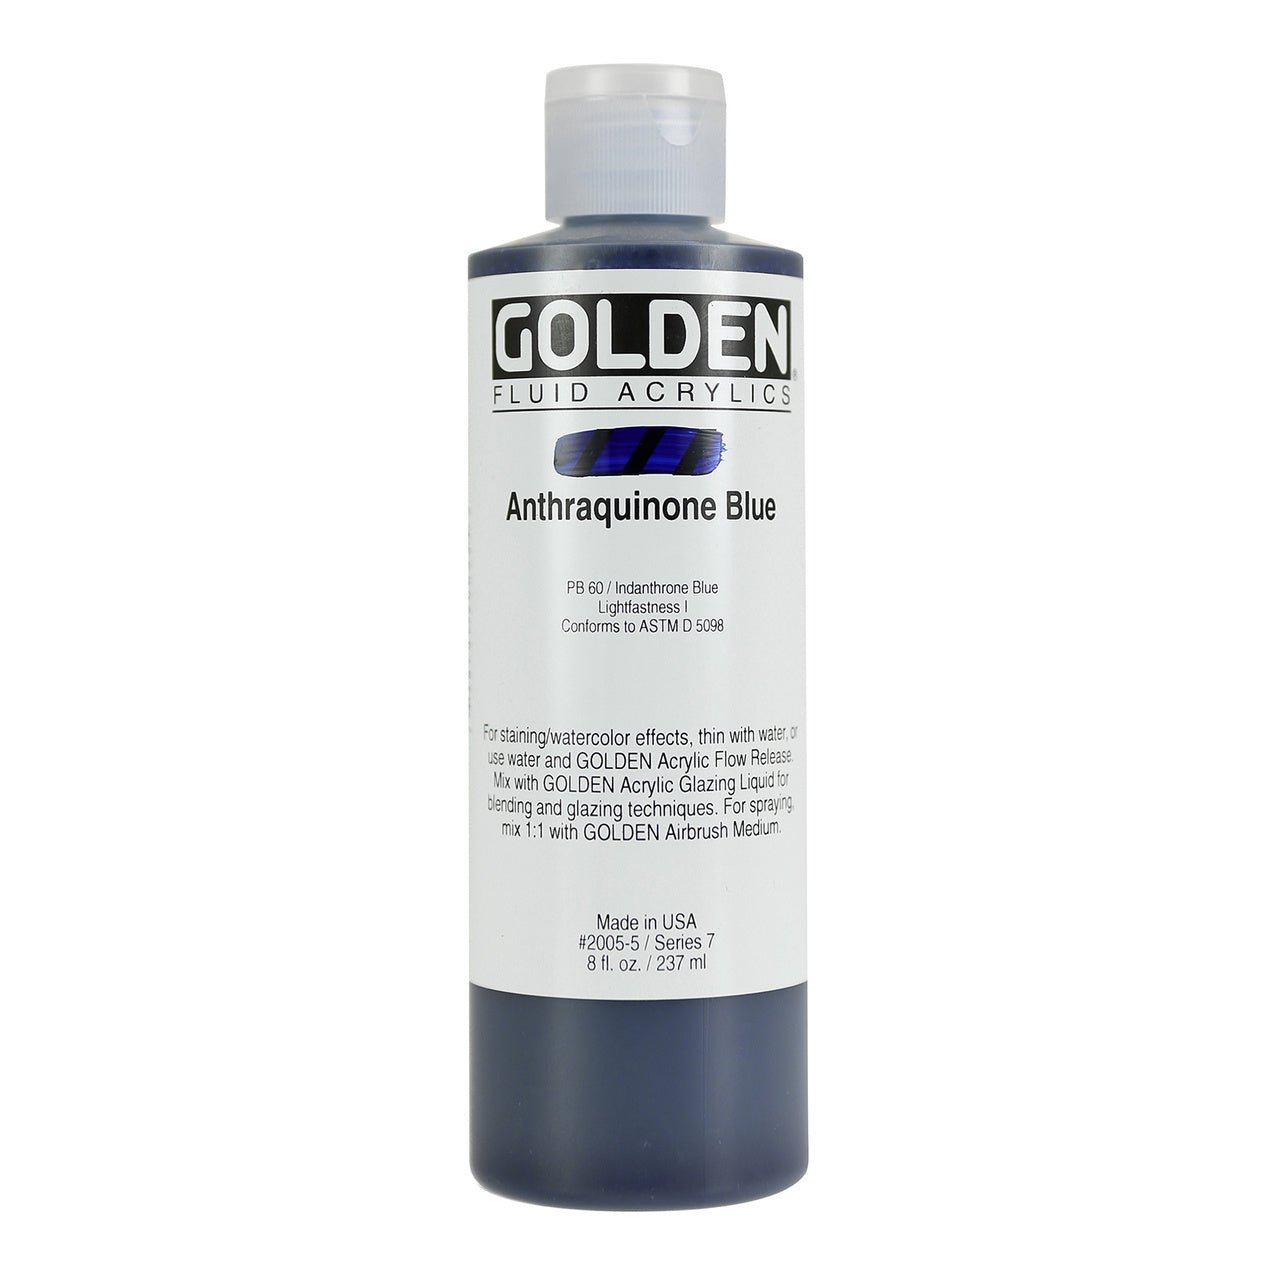 Golden Fluid Acrylic Anthraquinone Blue 8 oz - merriartist.com